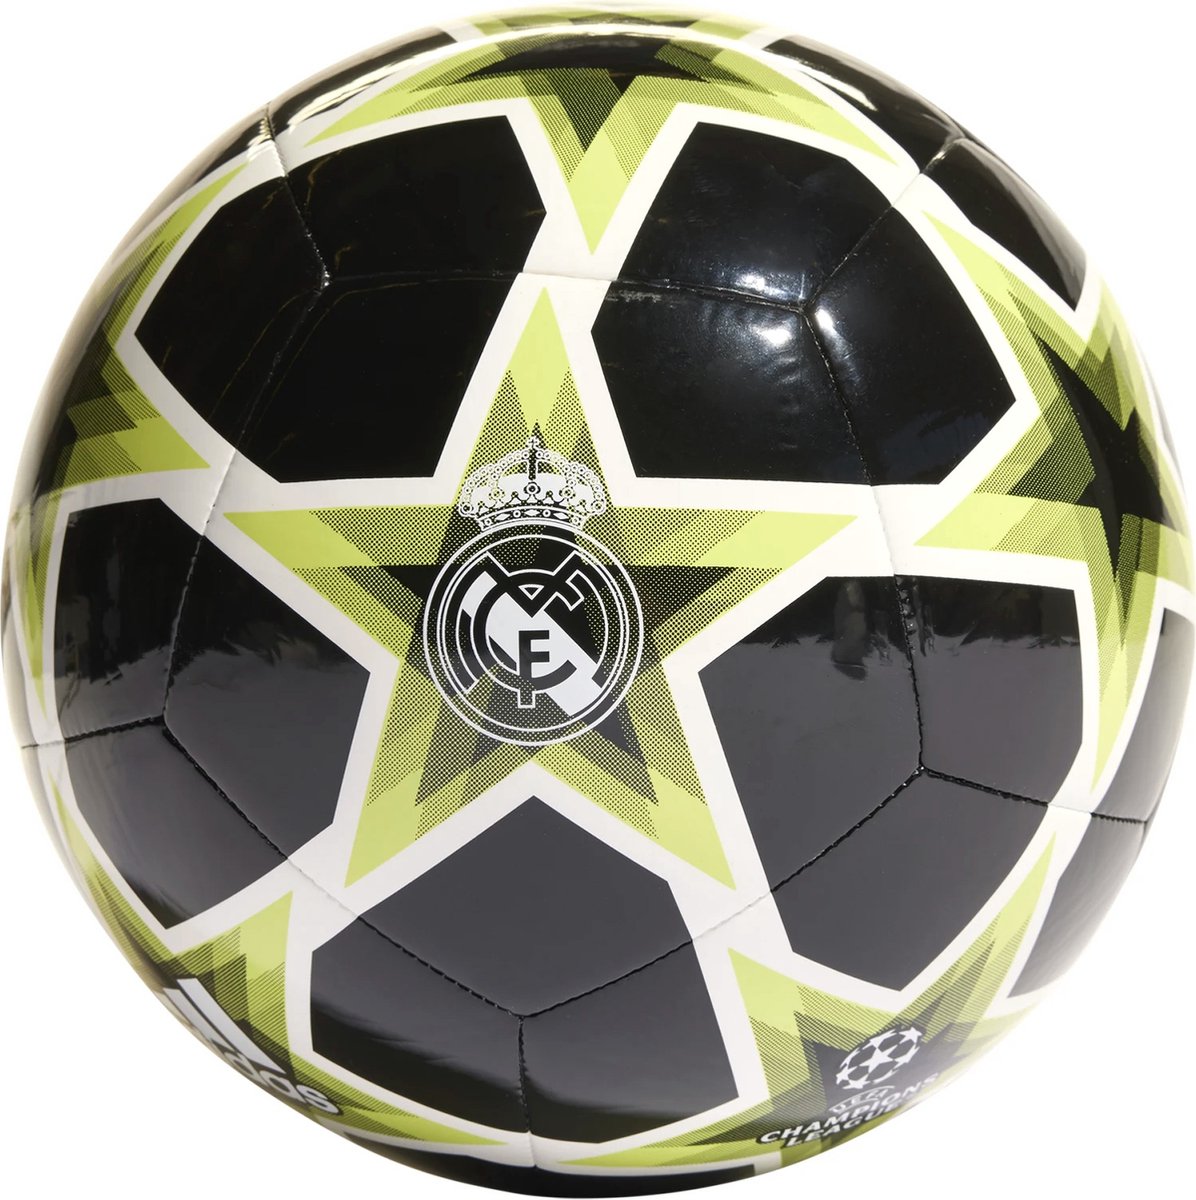 Ballon de football du Real Madrid Adidas Champions League - taille